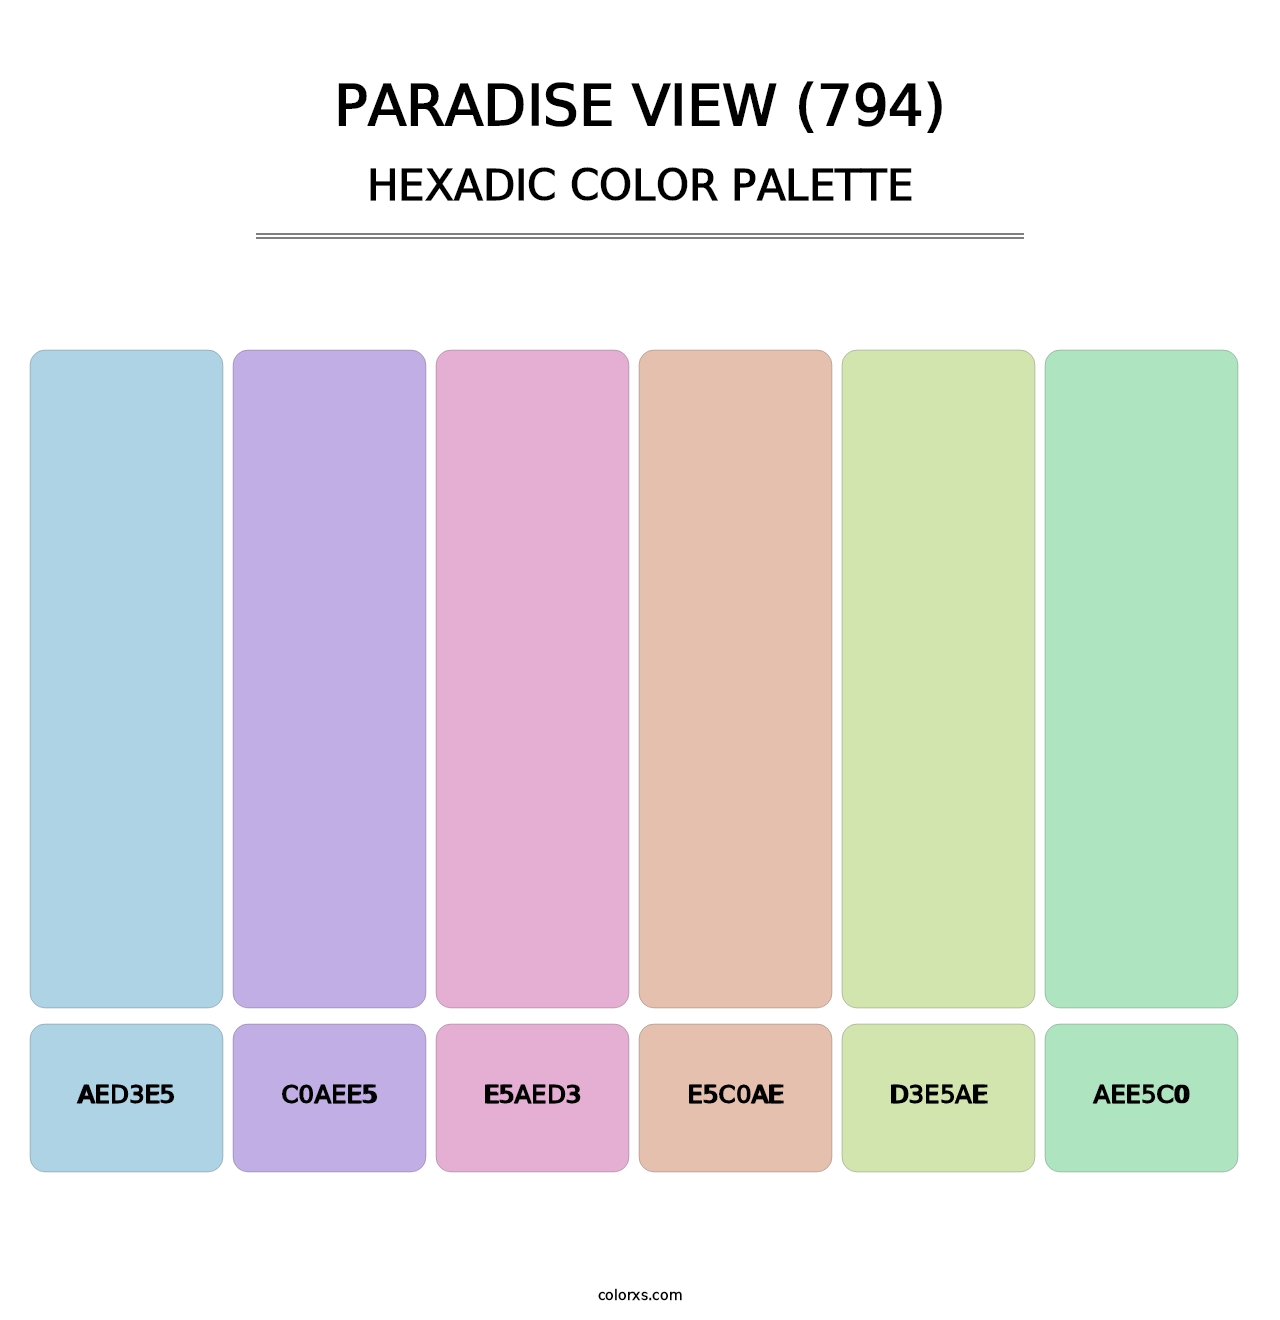 Paradise View (794) - Hexadic Color Palette